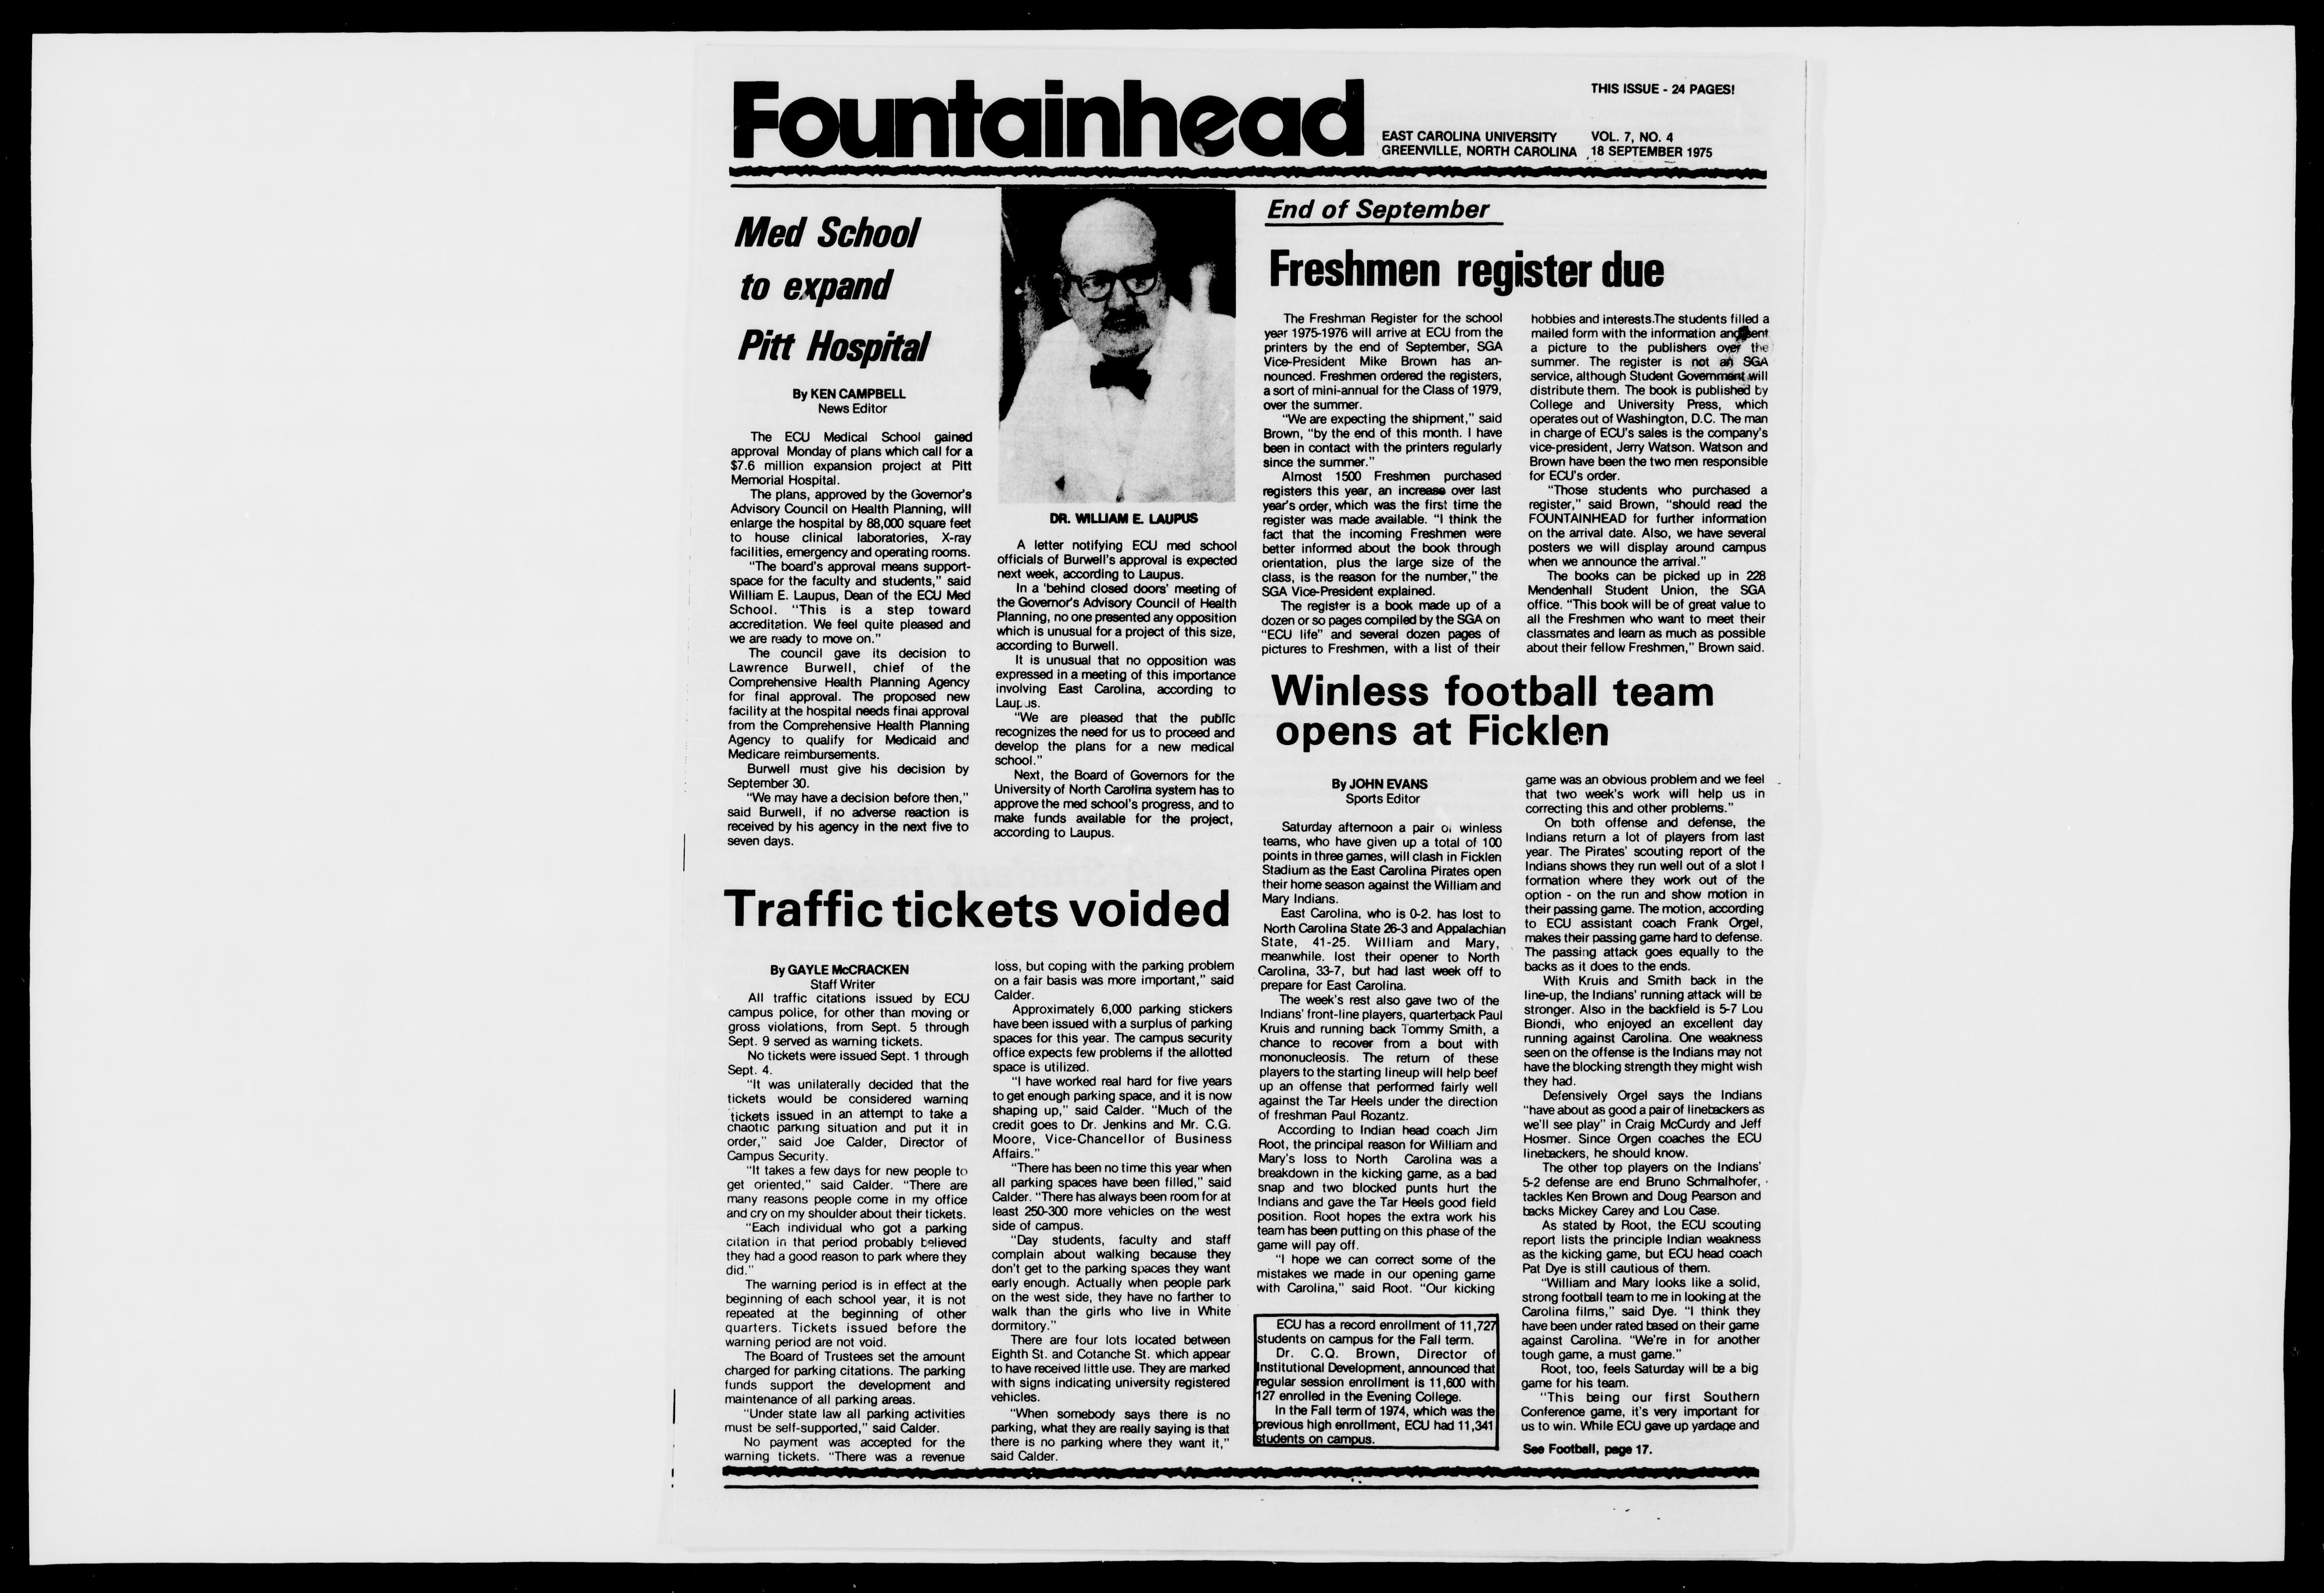 Fountainhead, September 18, 1975 image